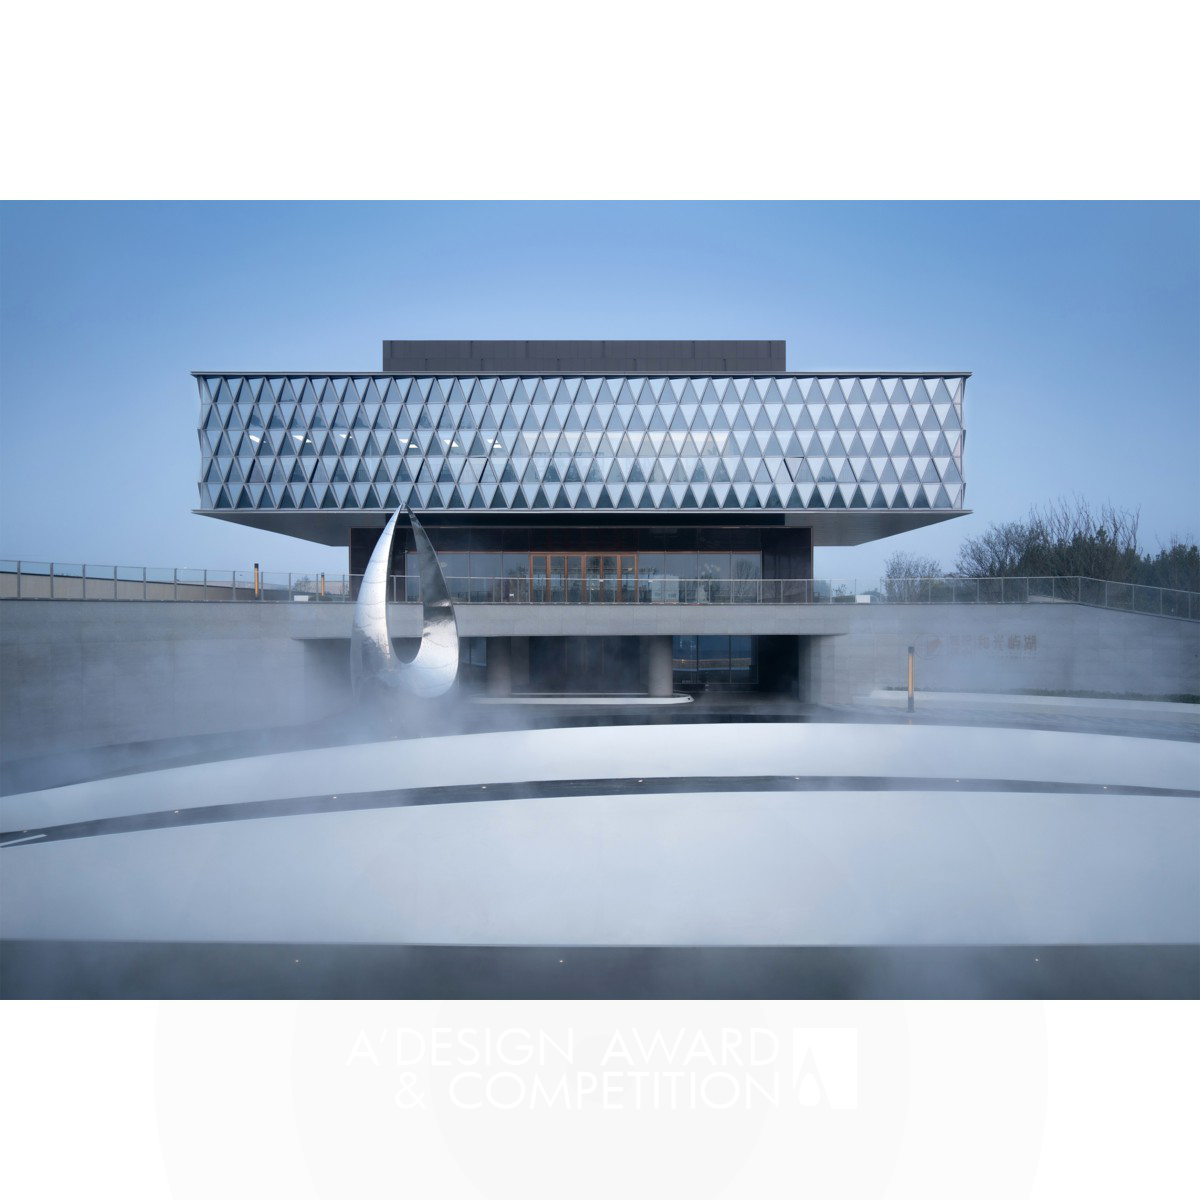 Kirin Island Exhibition Center by Zhubo Design Silver Architecture, Building and Structure Design Award Winner 2023 